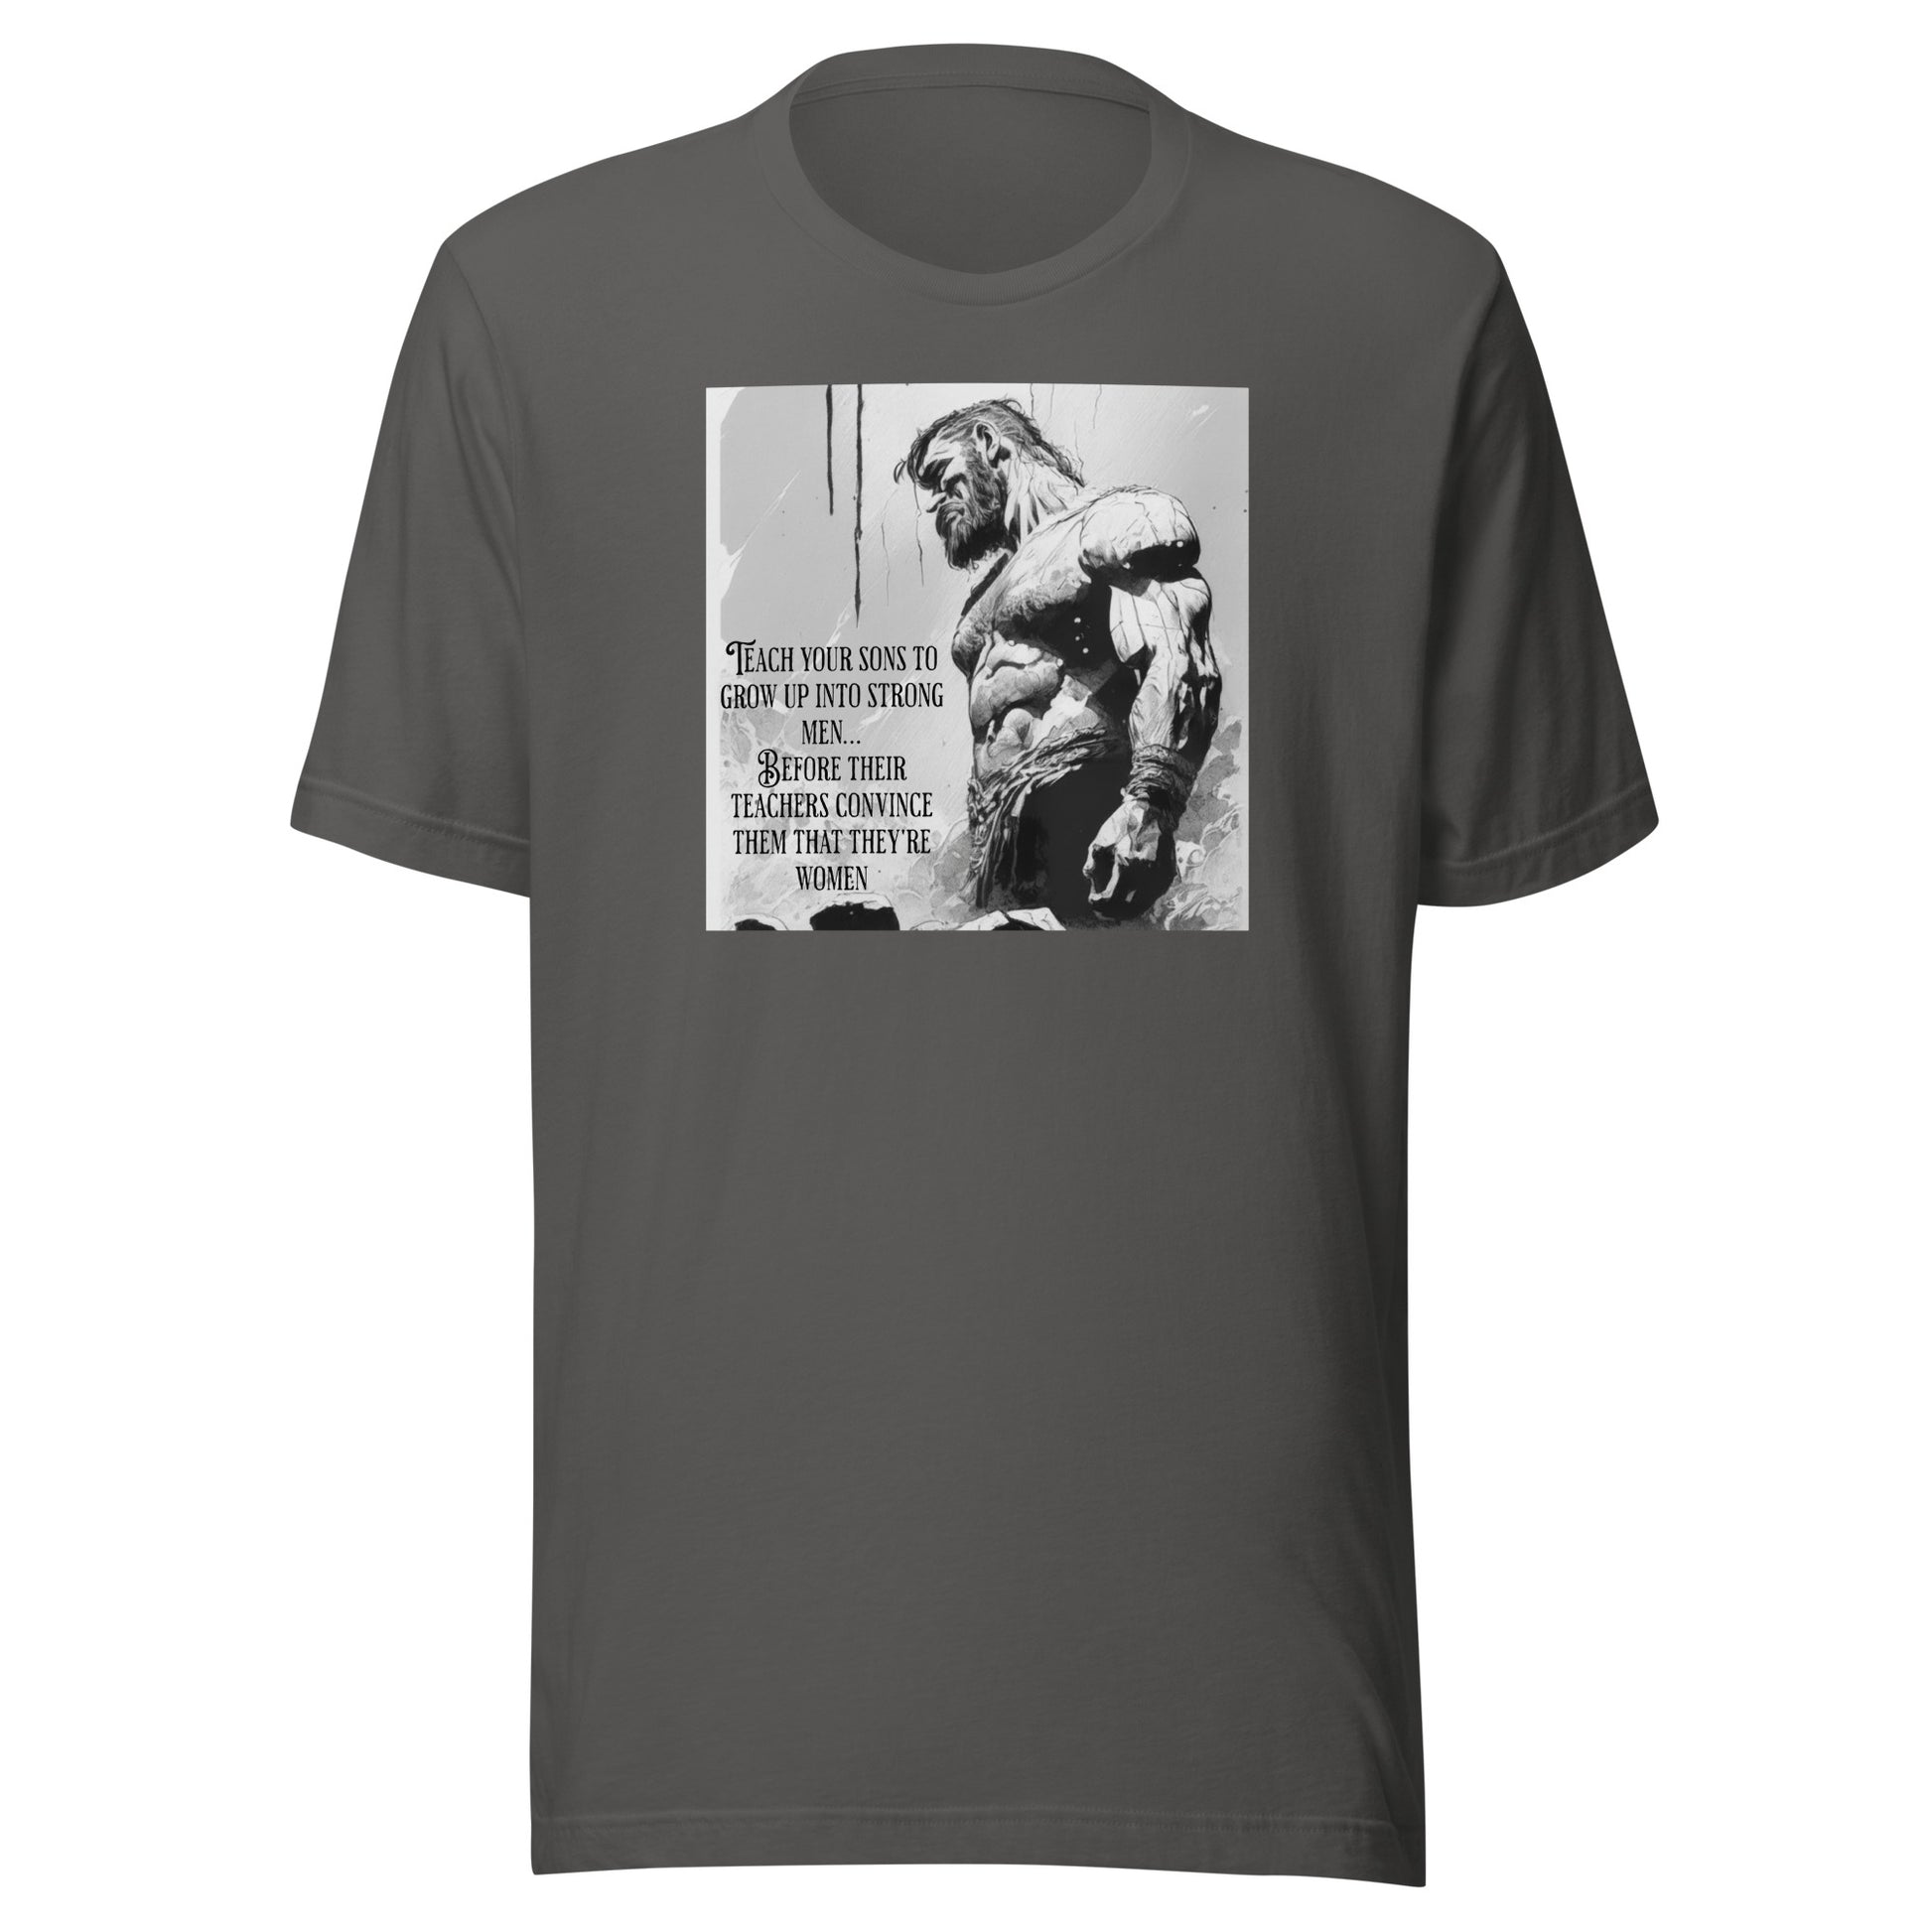 Raise Strong Men Graphic Men's T-Shirt Asphalt